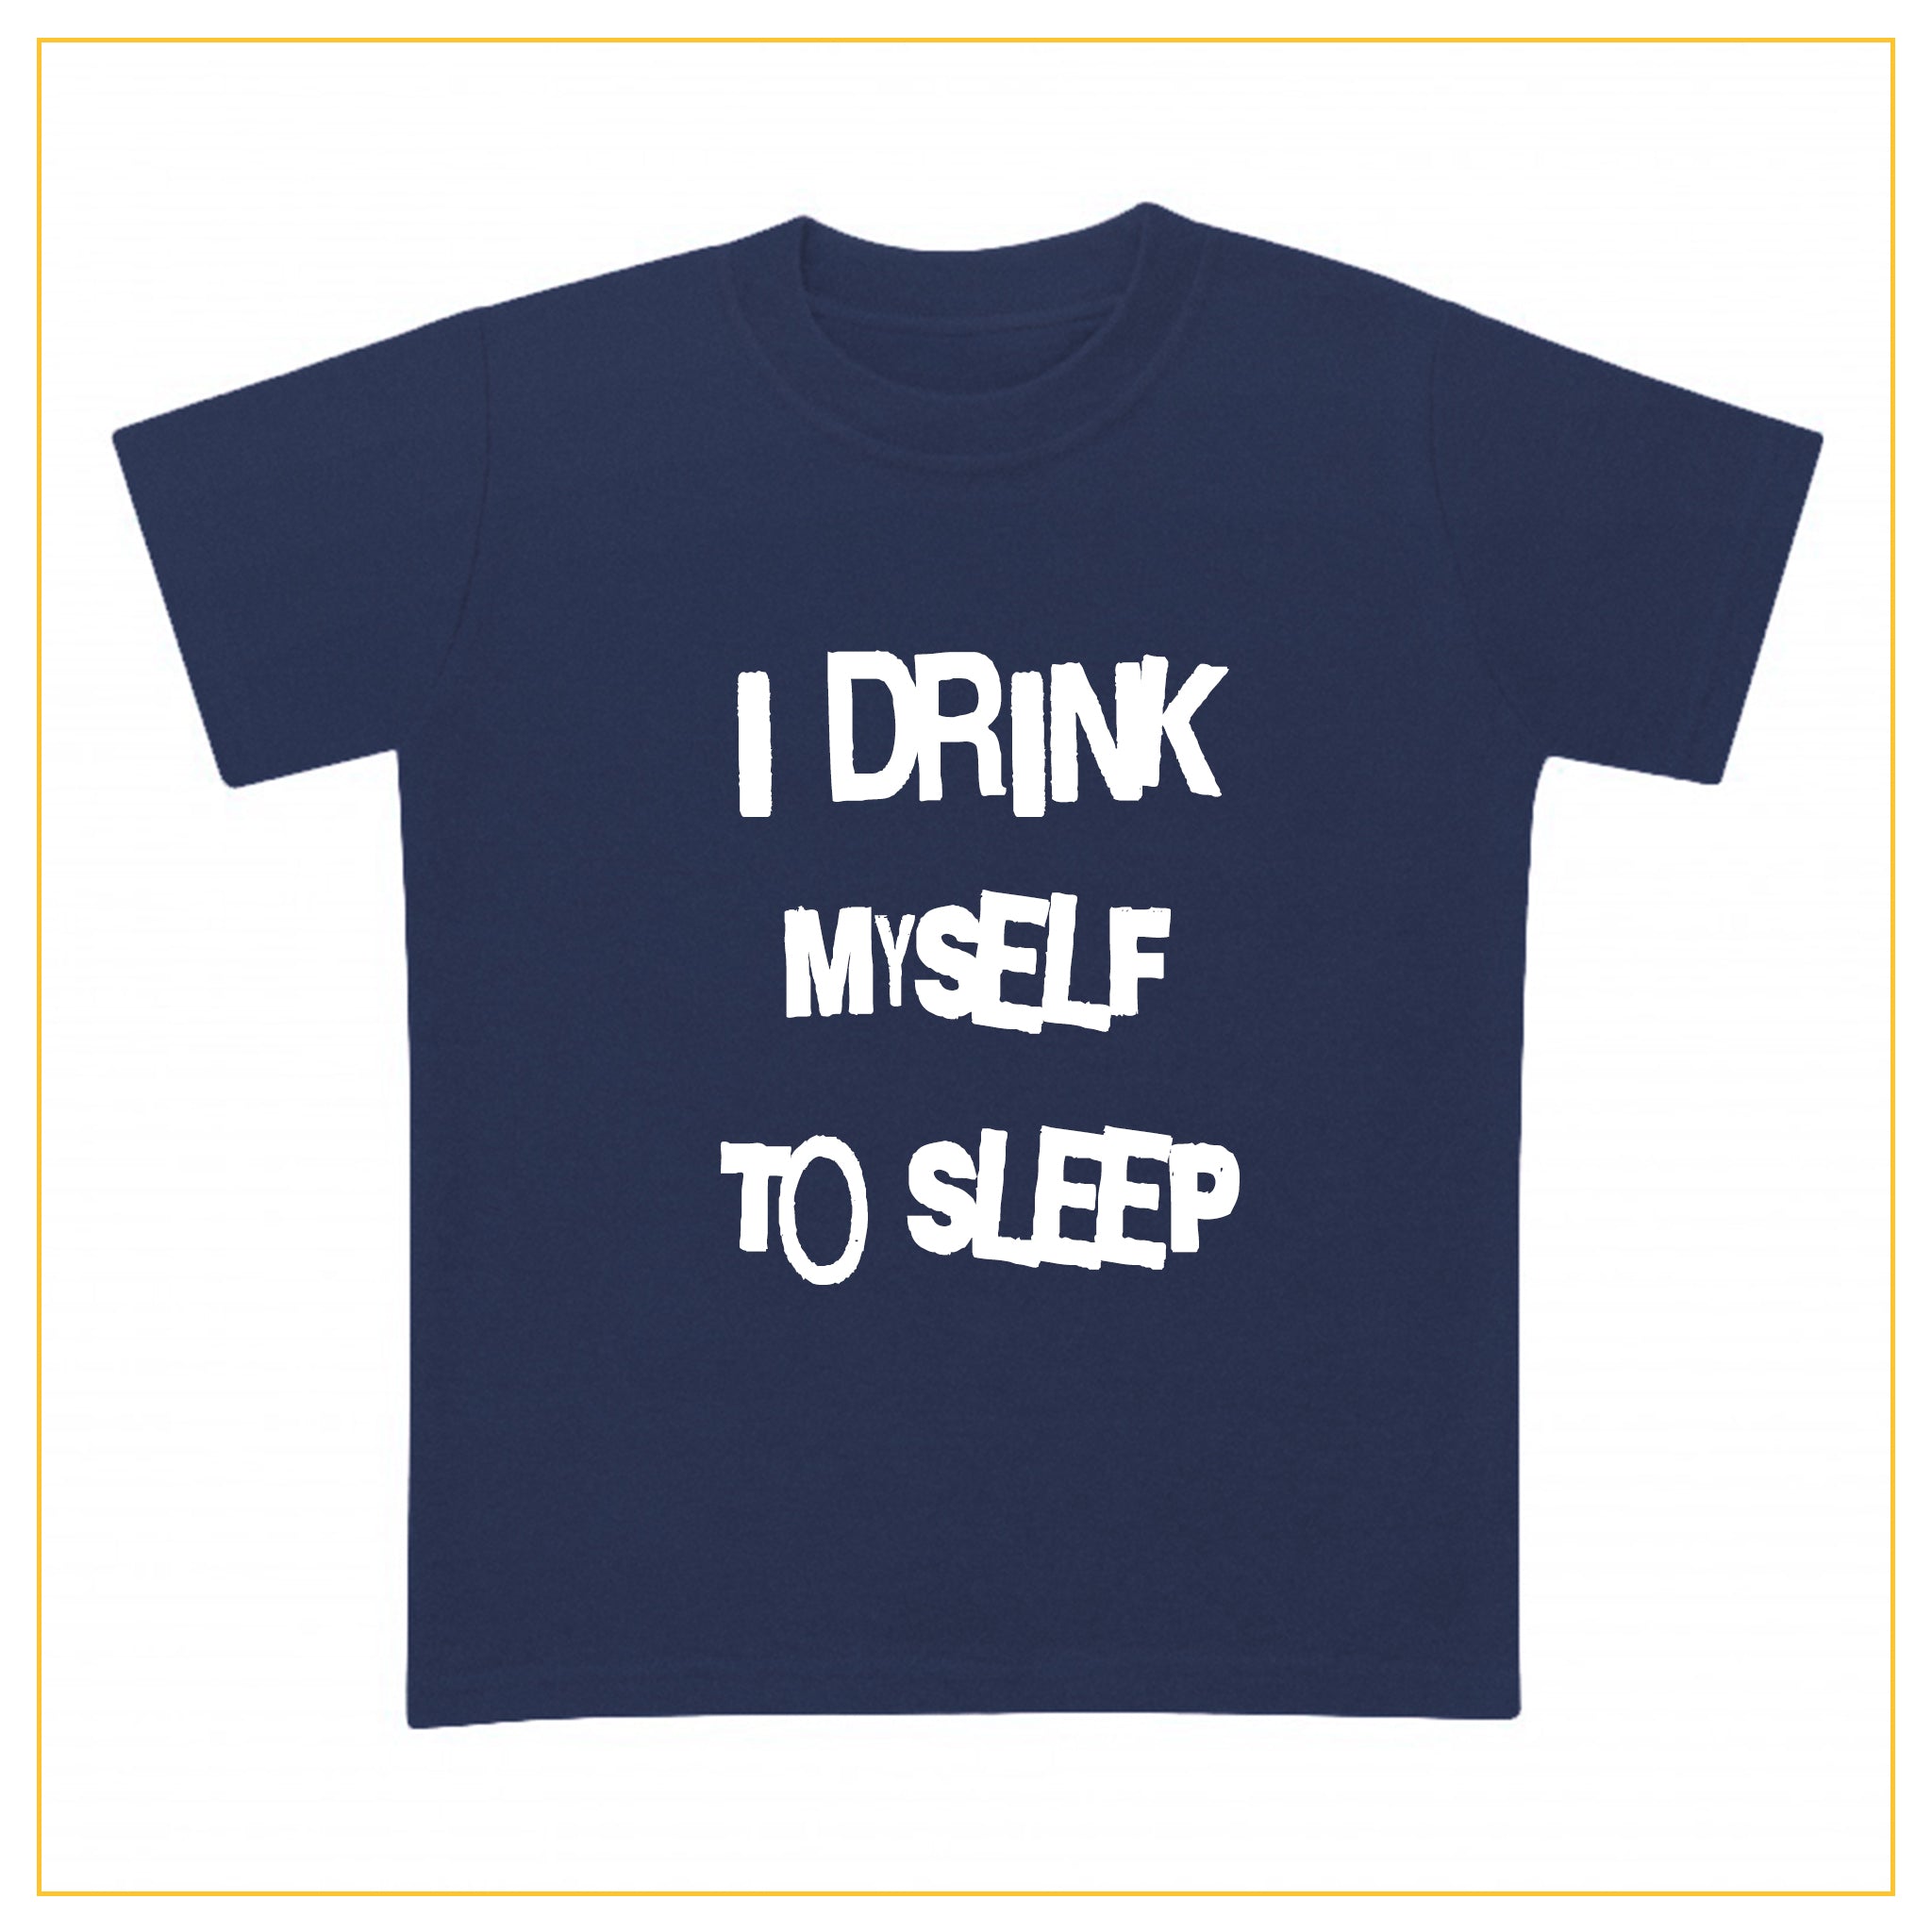 I drink myself to sleep baby t-shirt in navy blue